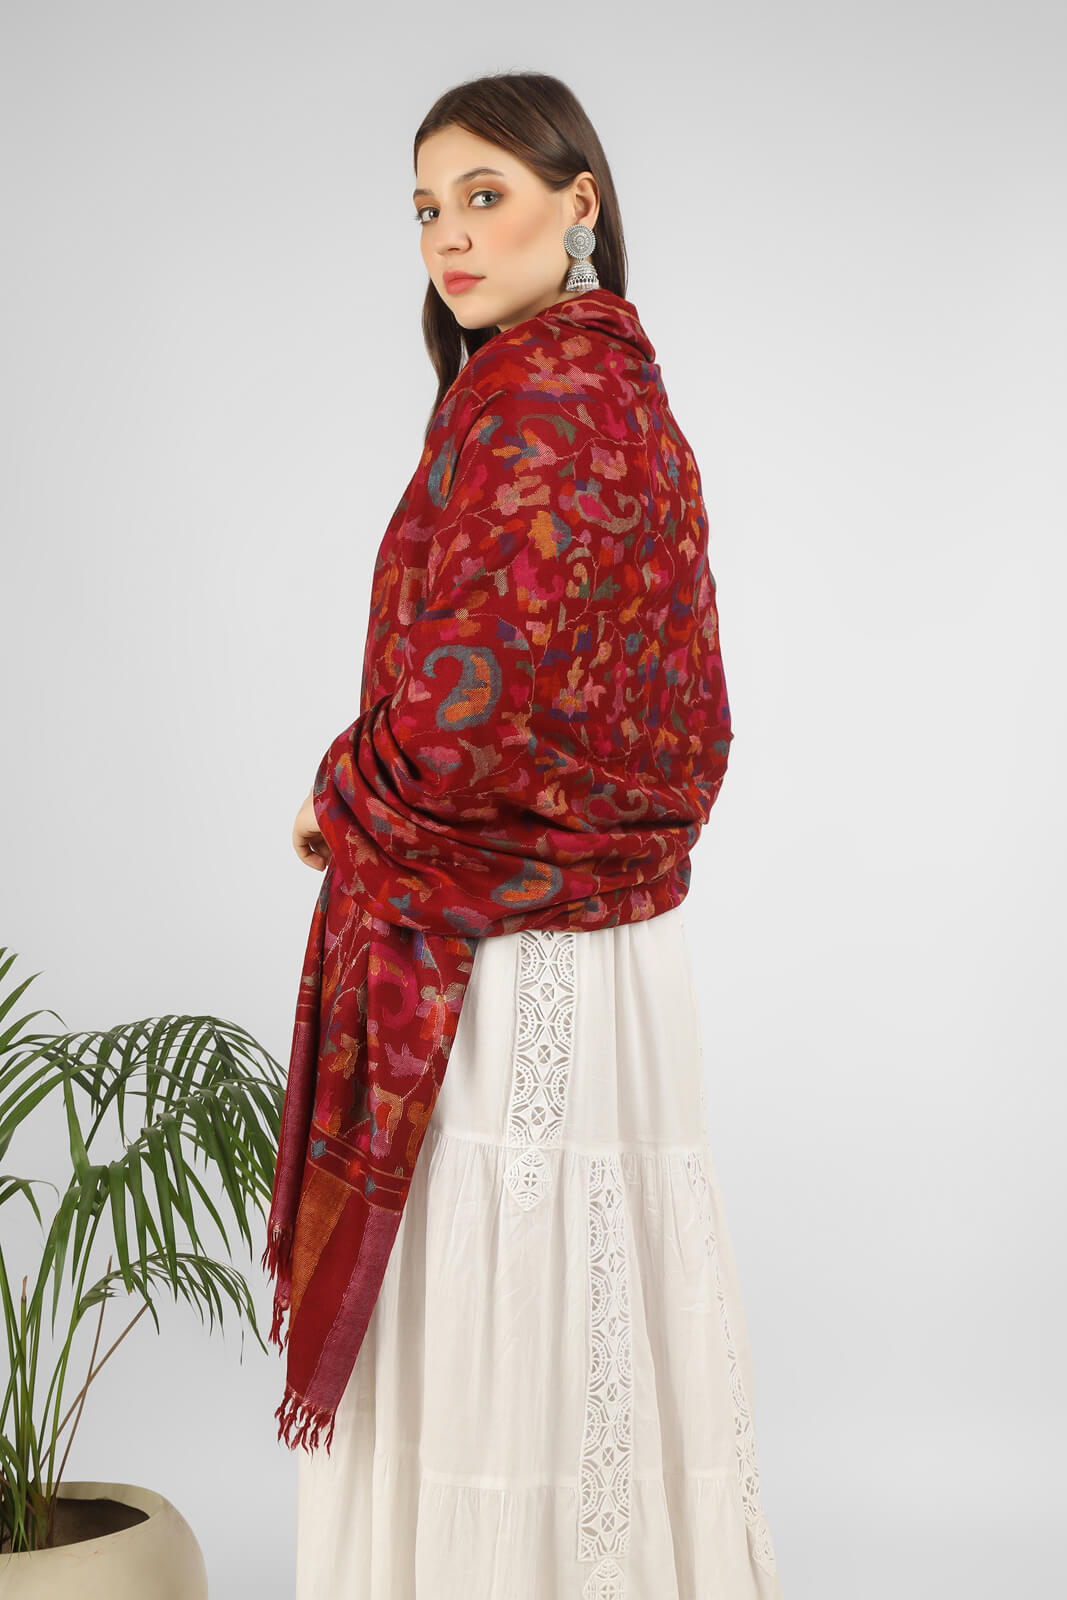 "KANI SHAWLS - Explore the Elegance of Maroon Kani Shawl, Skillfully Woven Florals and Nature's Colors in Splendid Kani Weave." LONDON - DELHI- KASHMIR - ONLINE